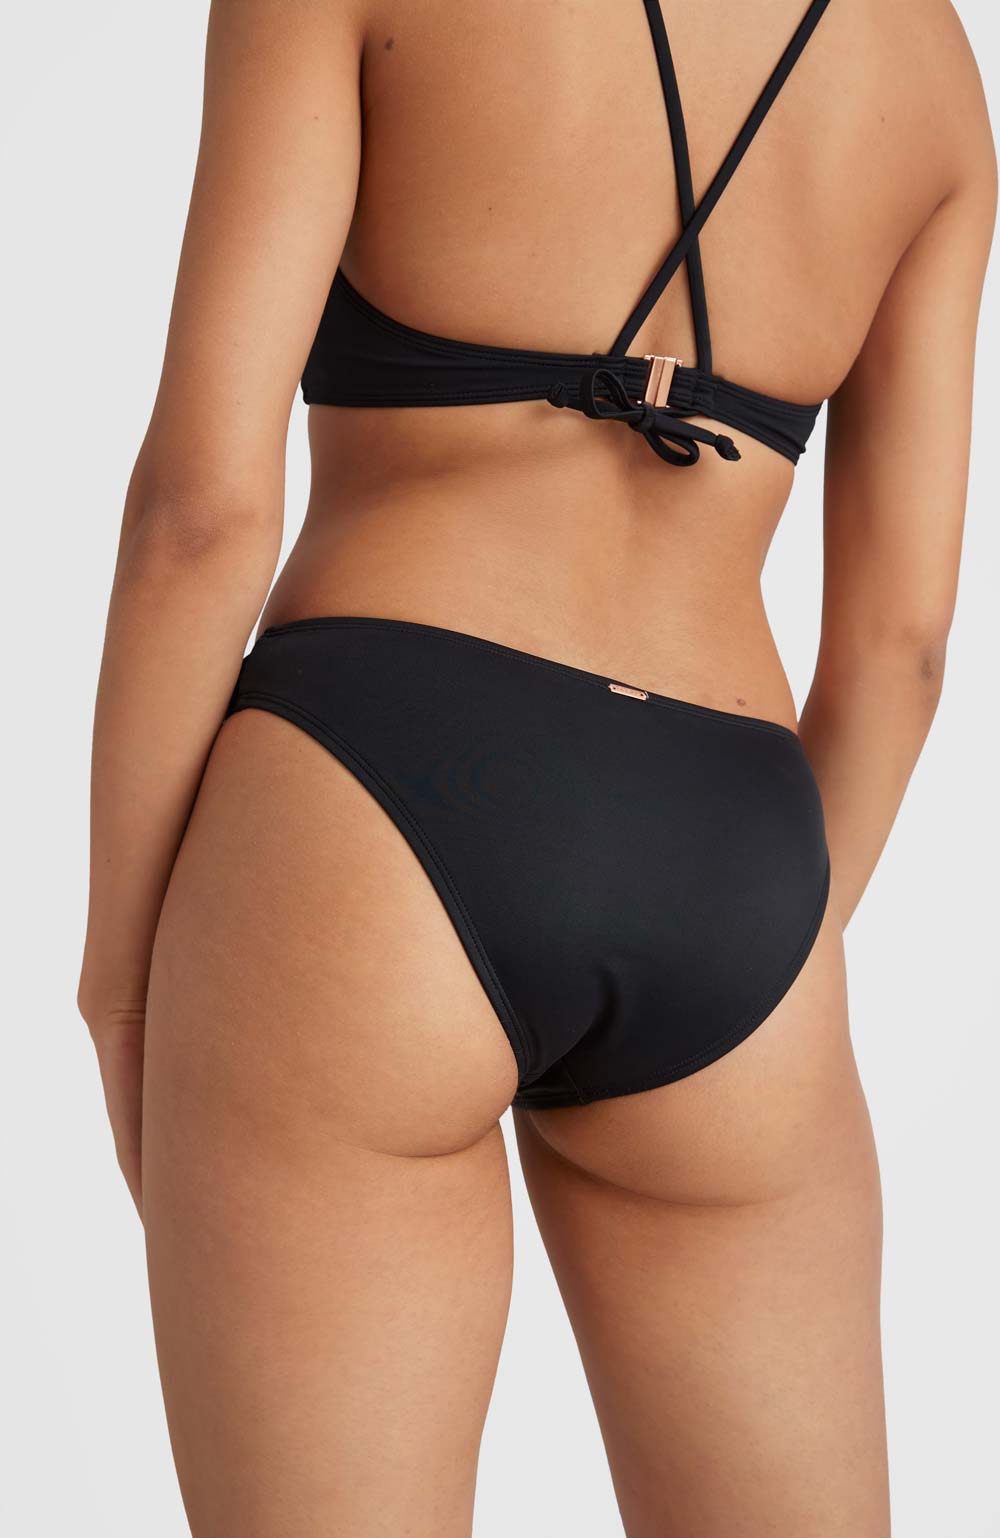 Women's bikini bottoms